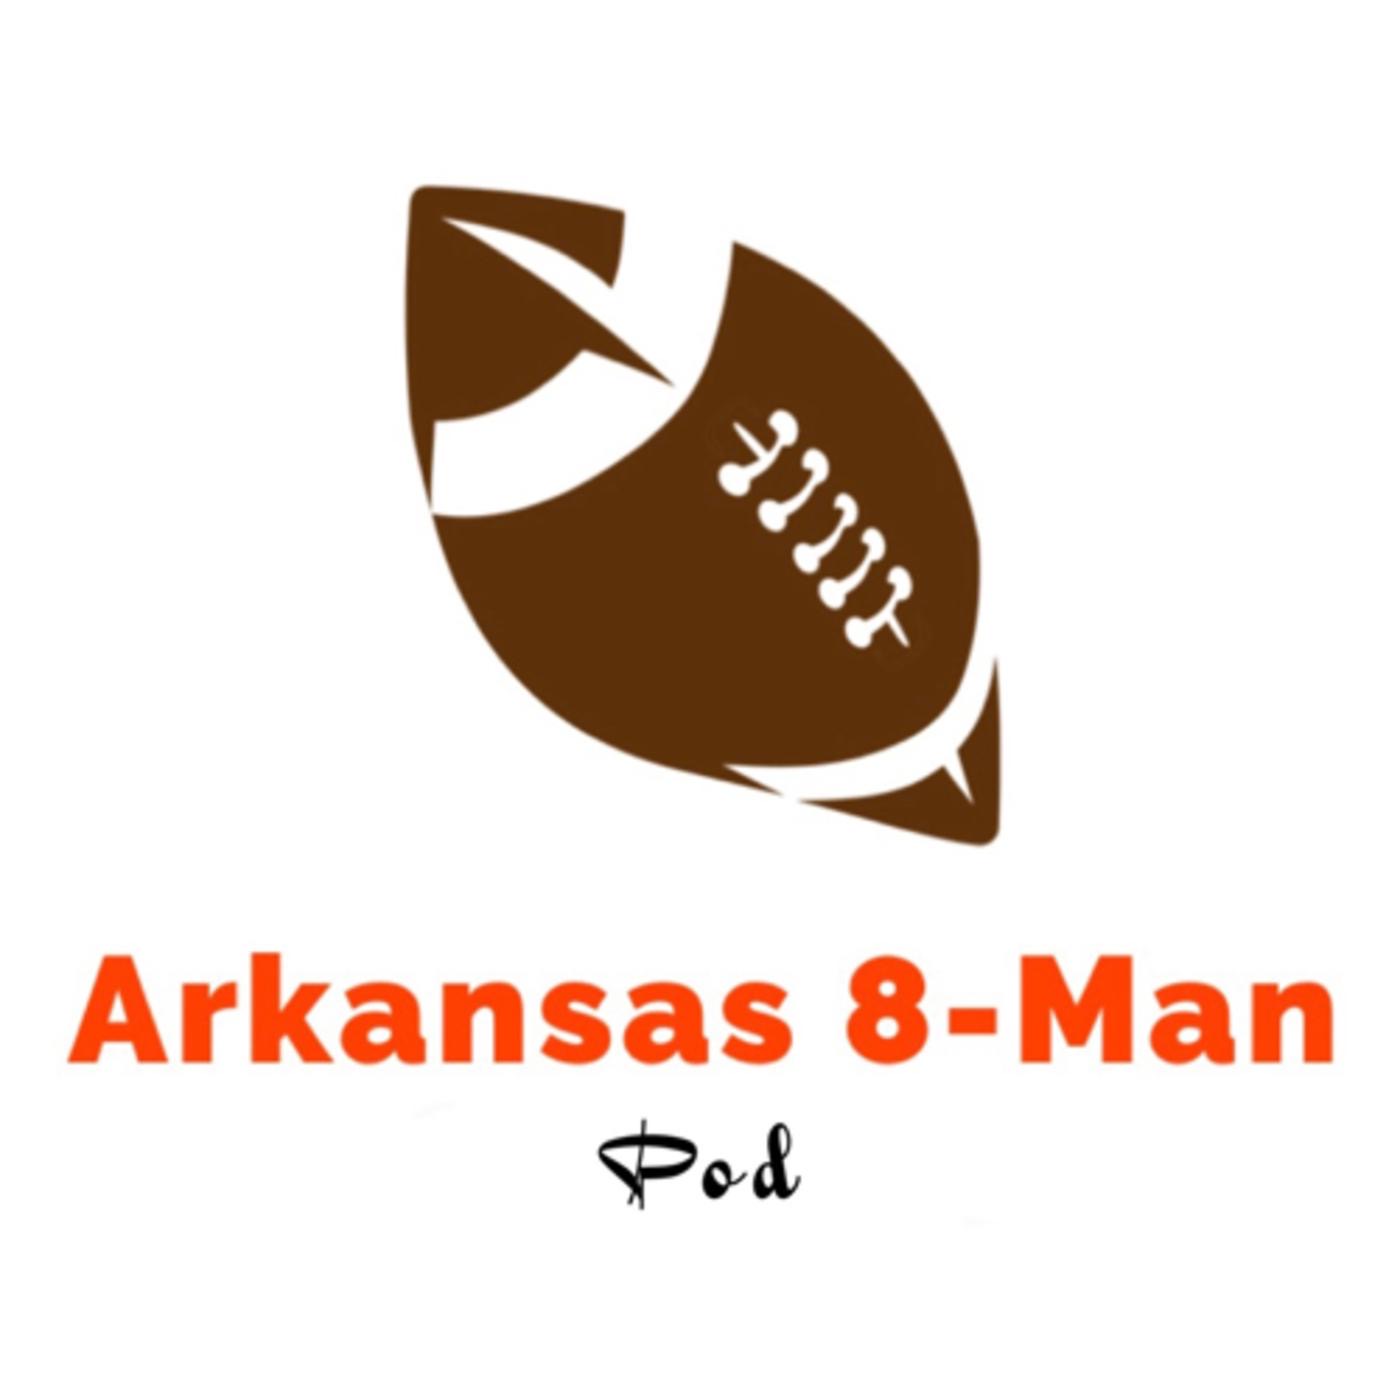 Arkansas 8-Man Pod Episode 8